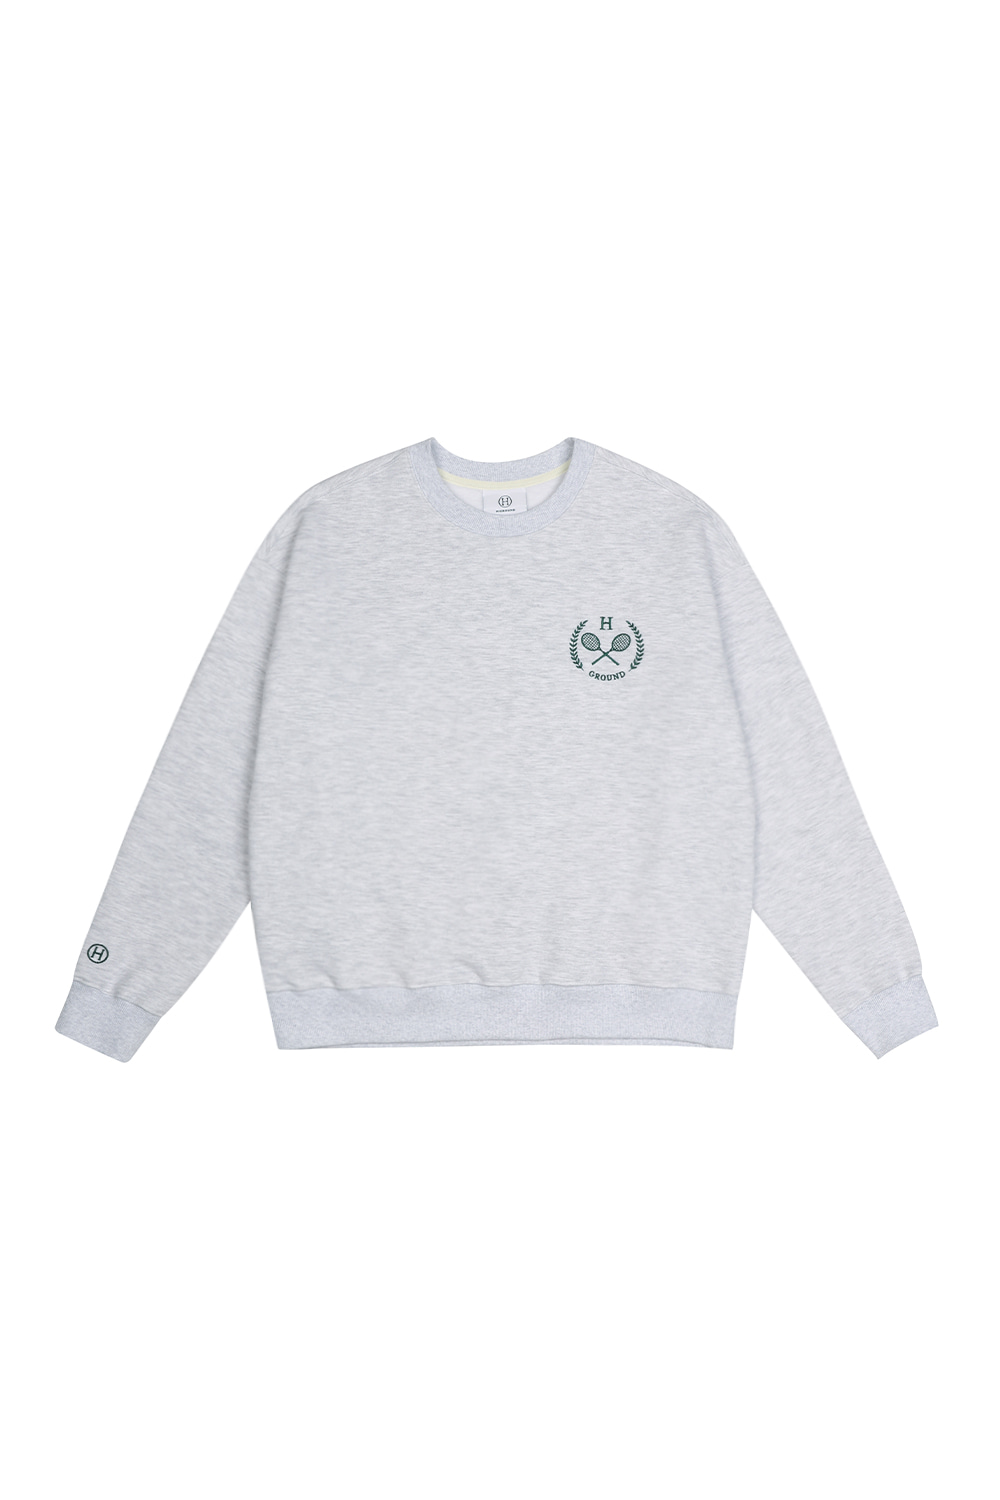 Tennis Lover Sweatshirt (기모.ver)_Melange Grey